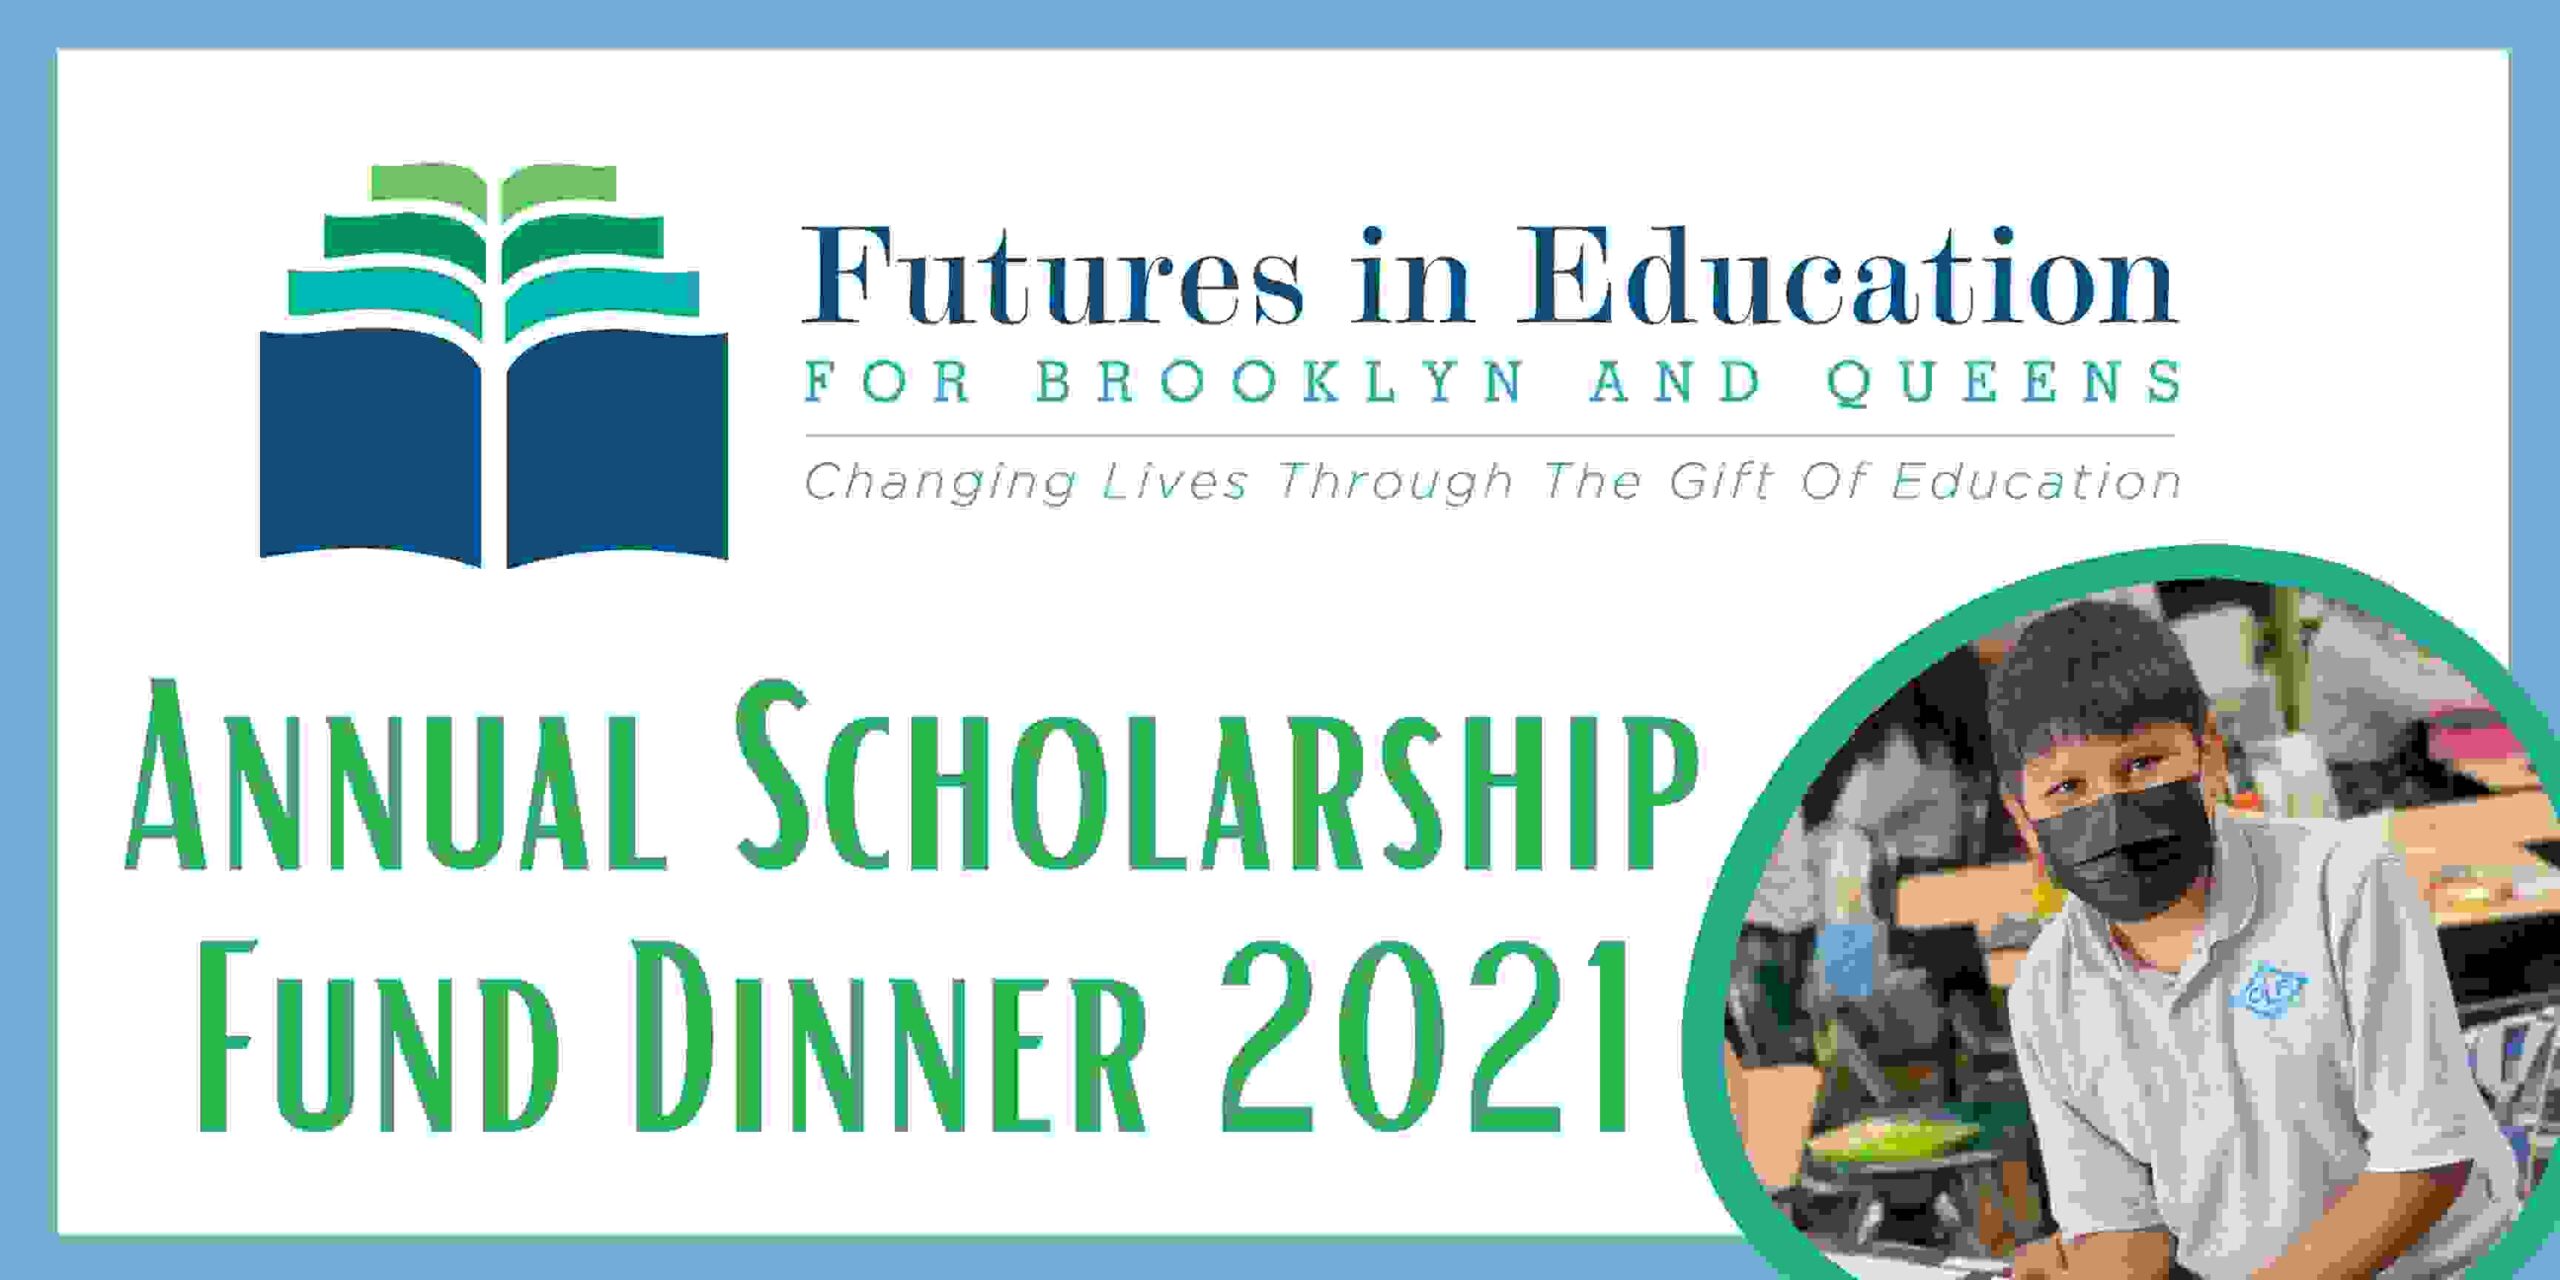 2021 Annual Scholarship Fund Dinner